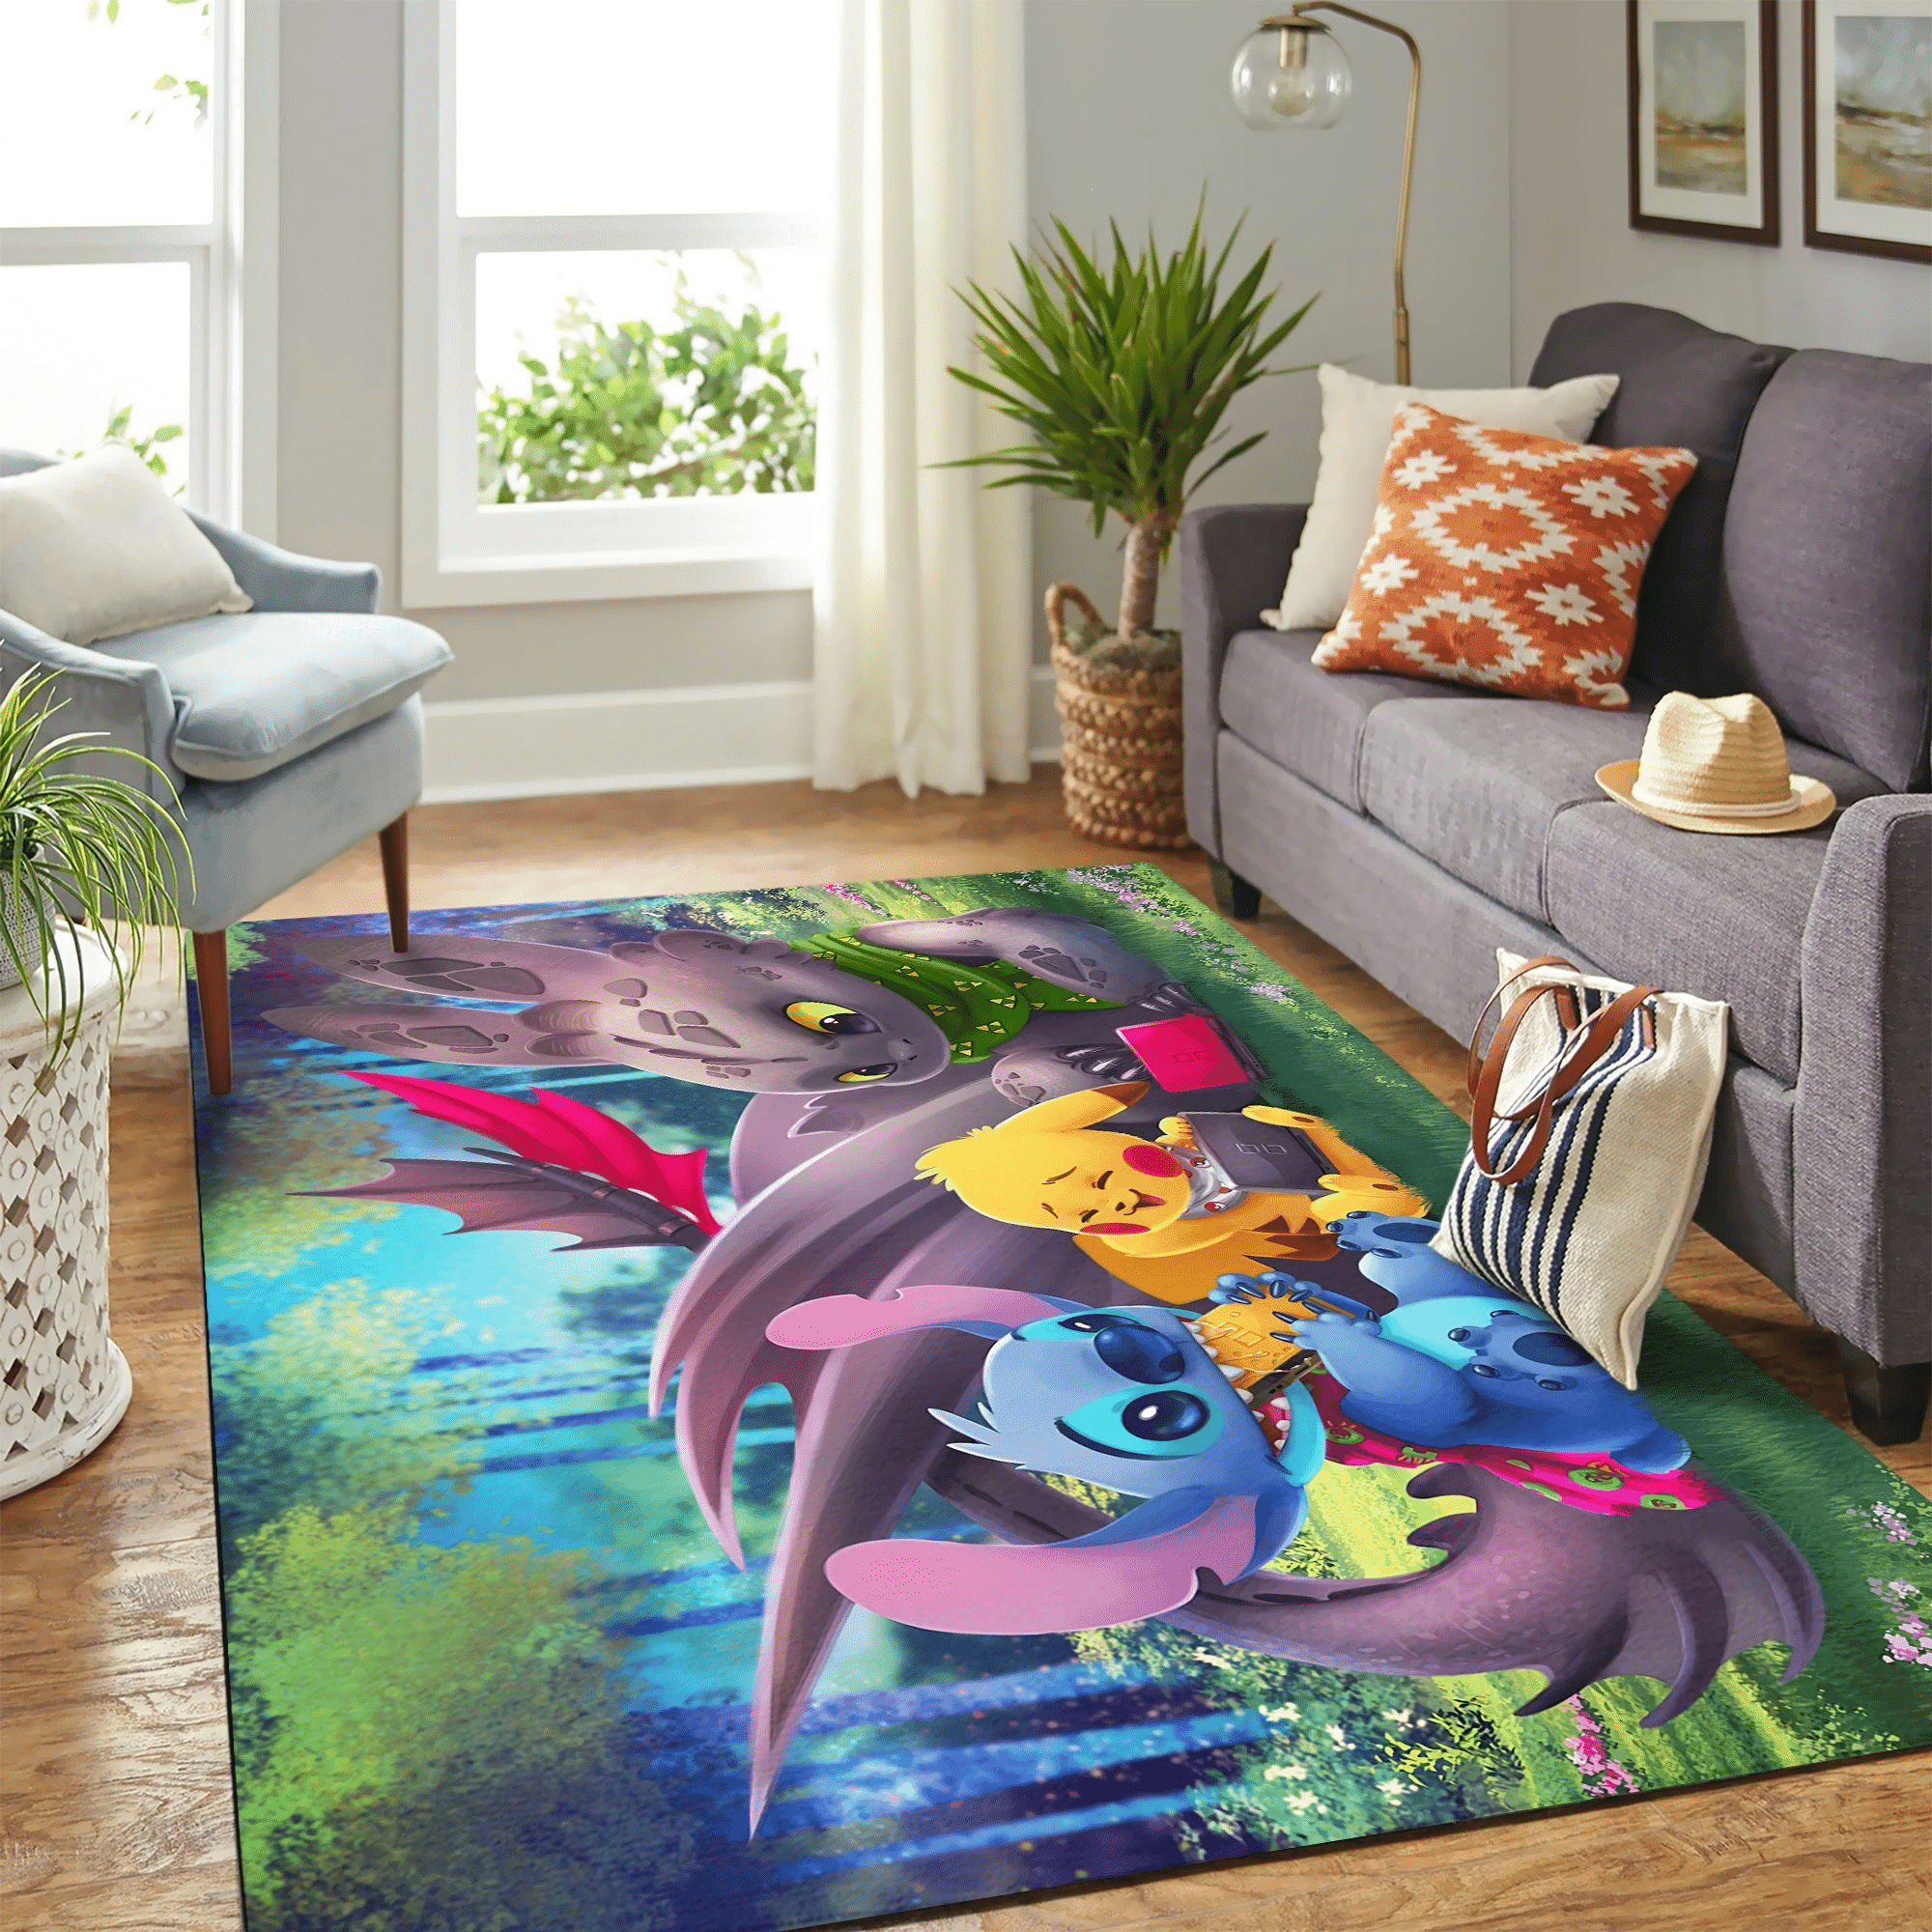 Toothless Stitch Pikachu Carpet Floor Area Rug Chrismas Gift - Indoor Outdoor Rugs 1